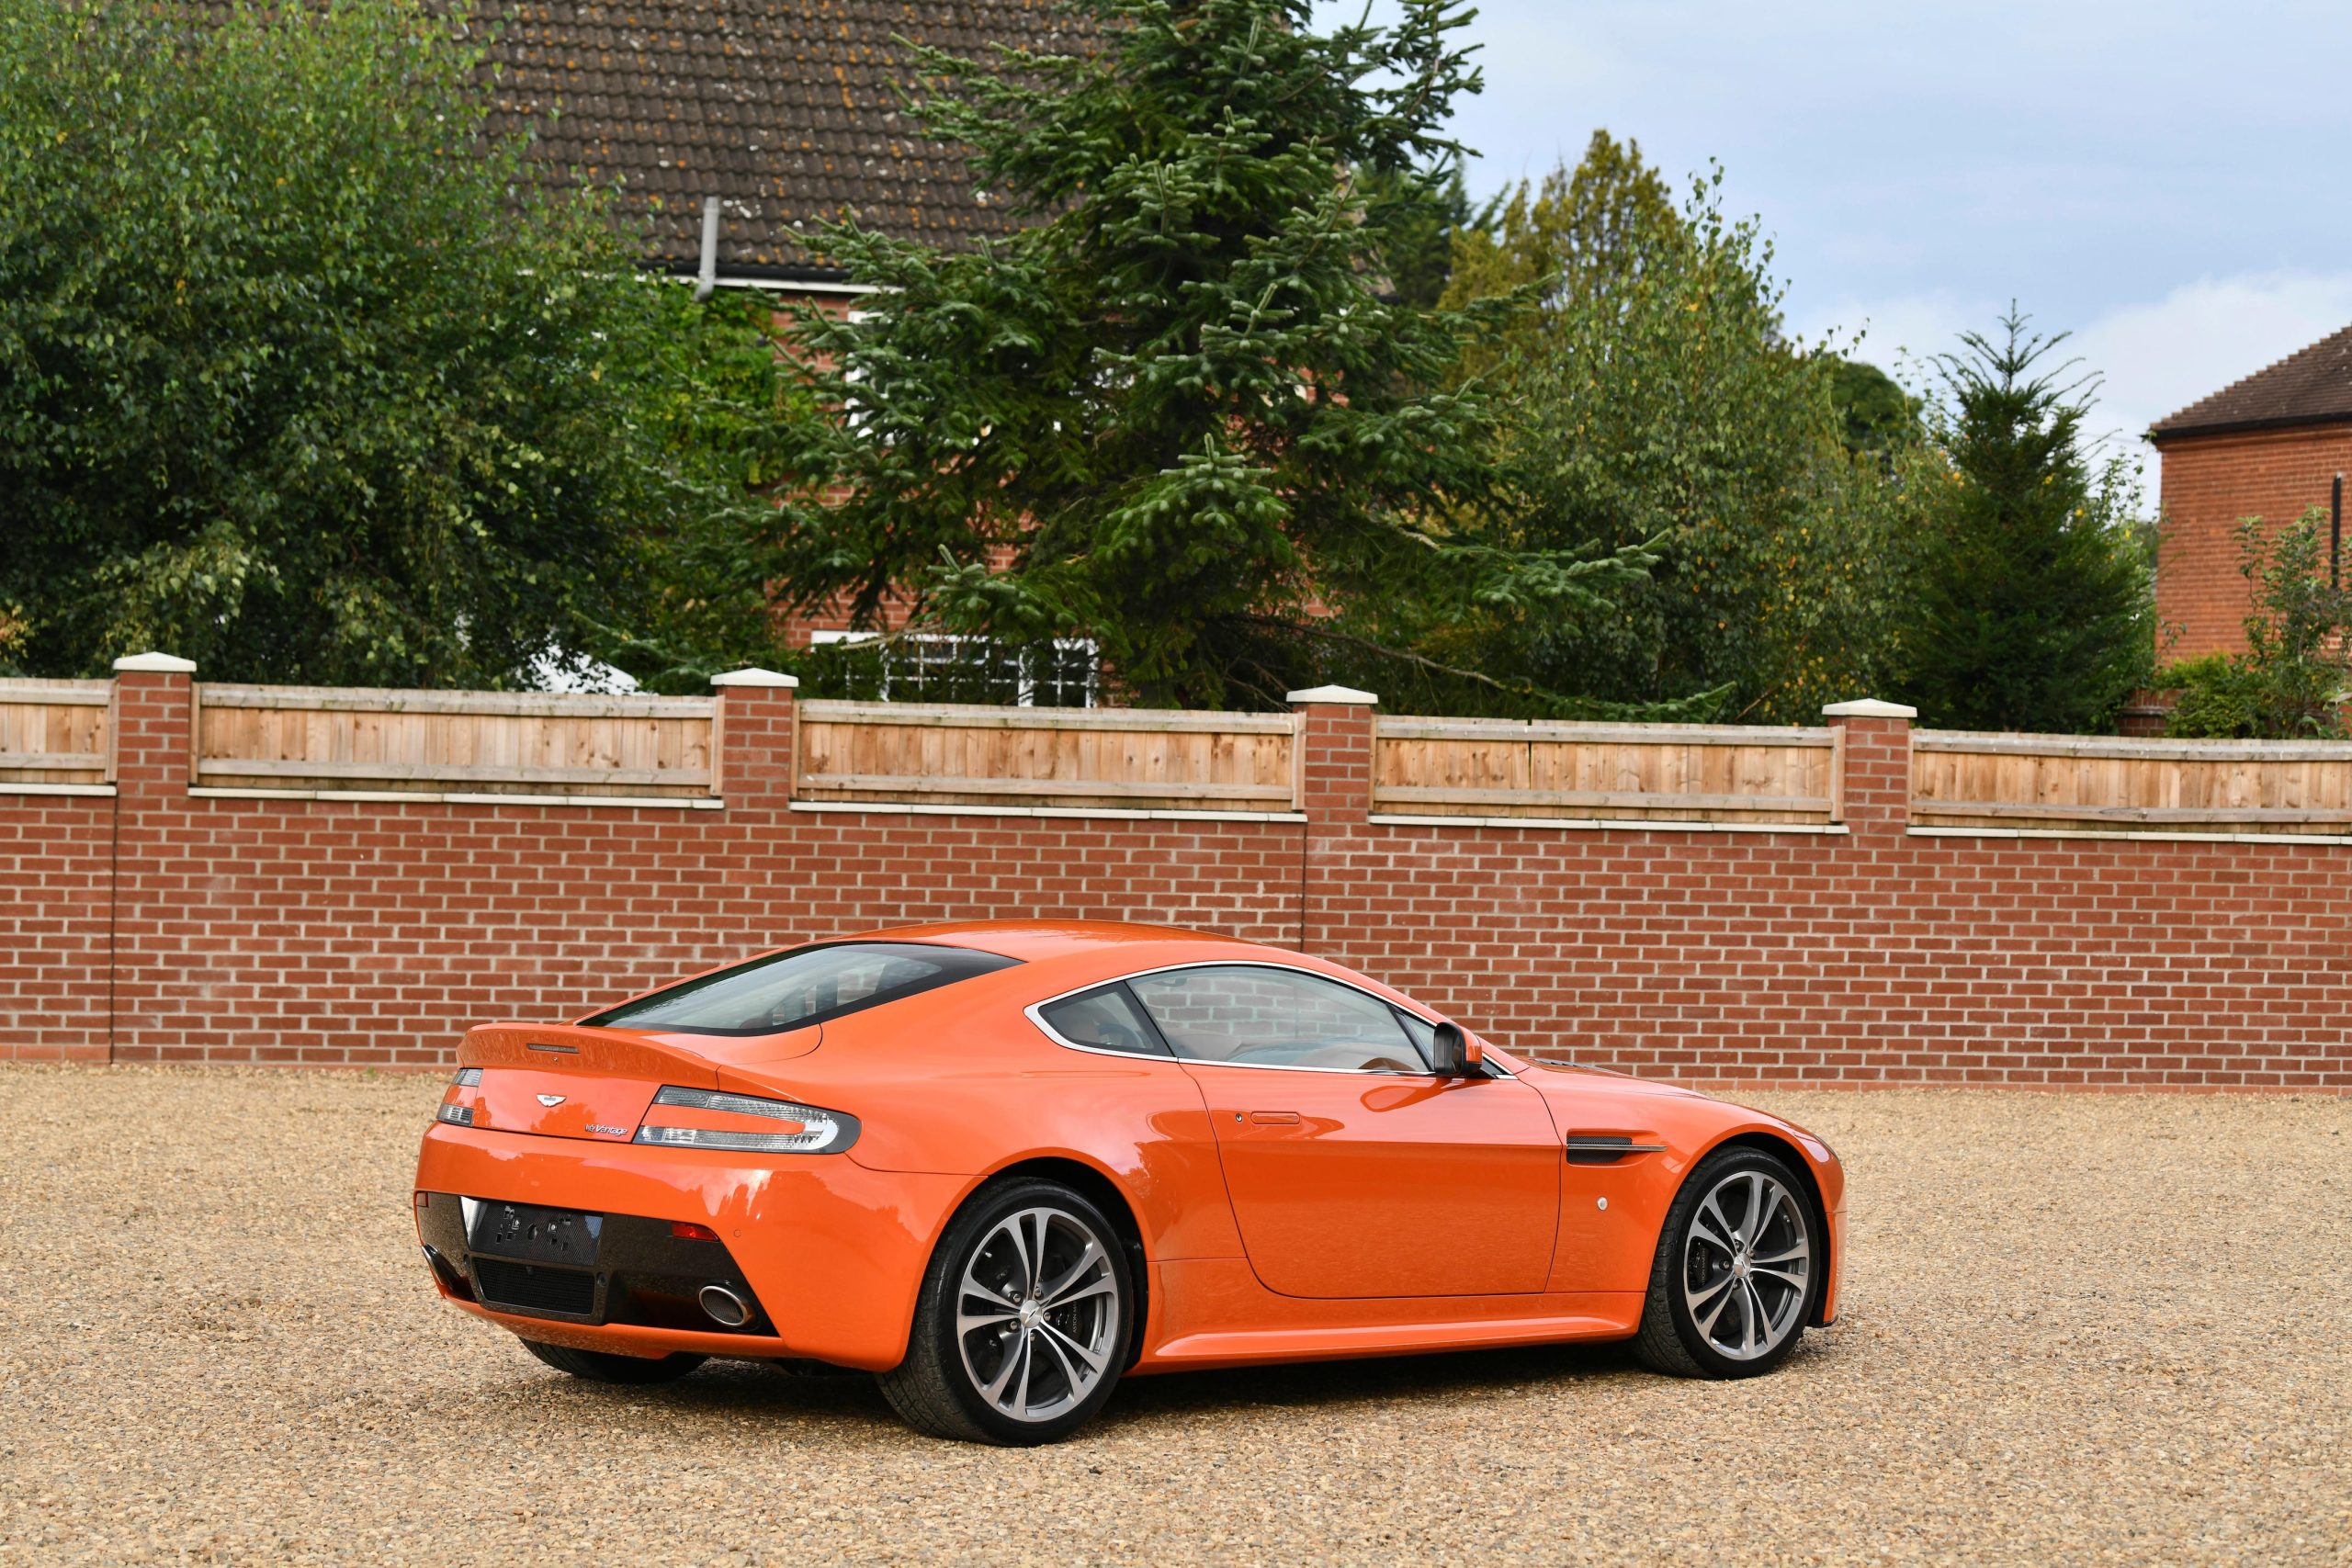 rear angled profile of an orange Aston Martin V12 Vantage